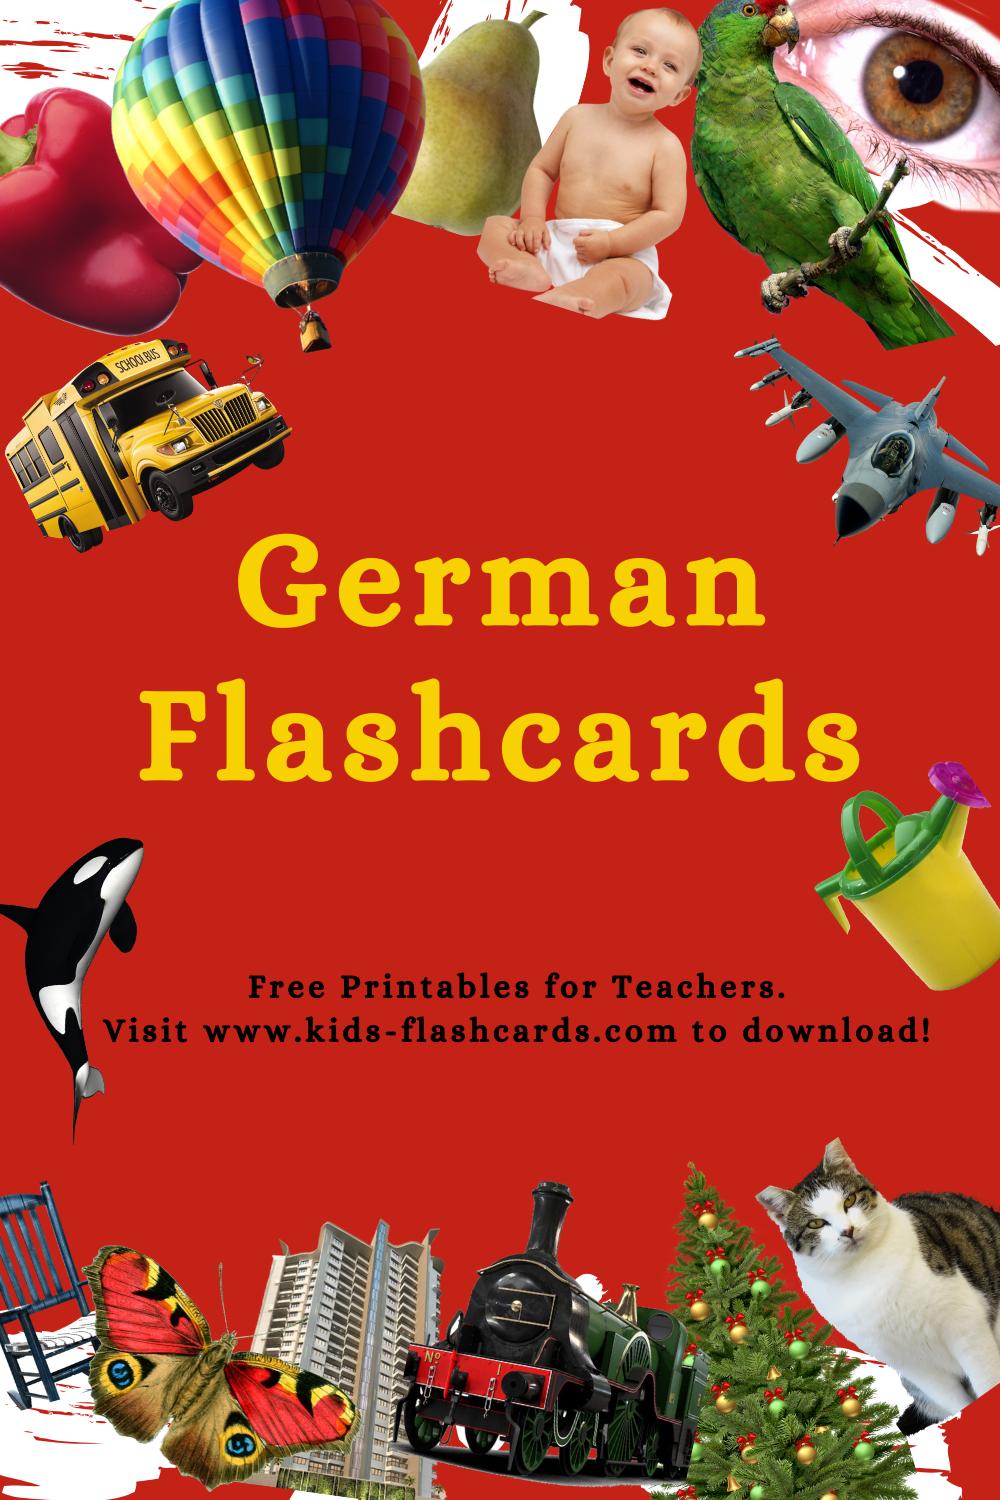 Worksheets to learn German language